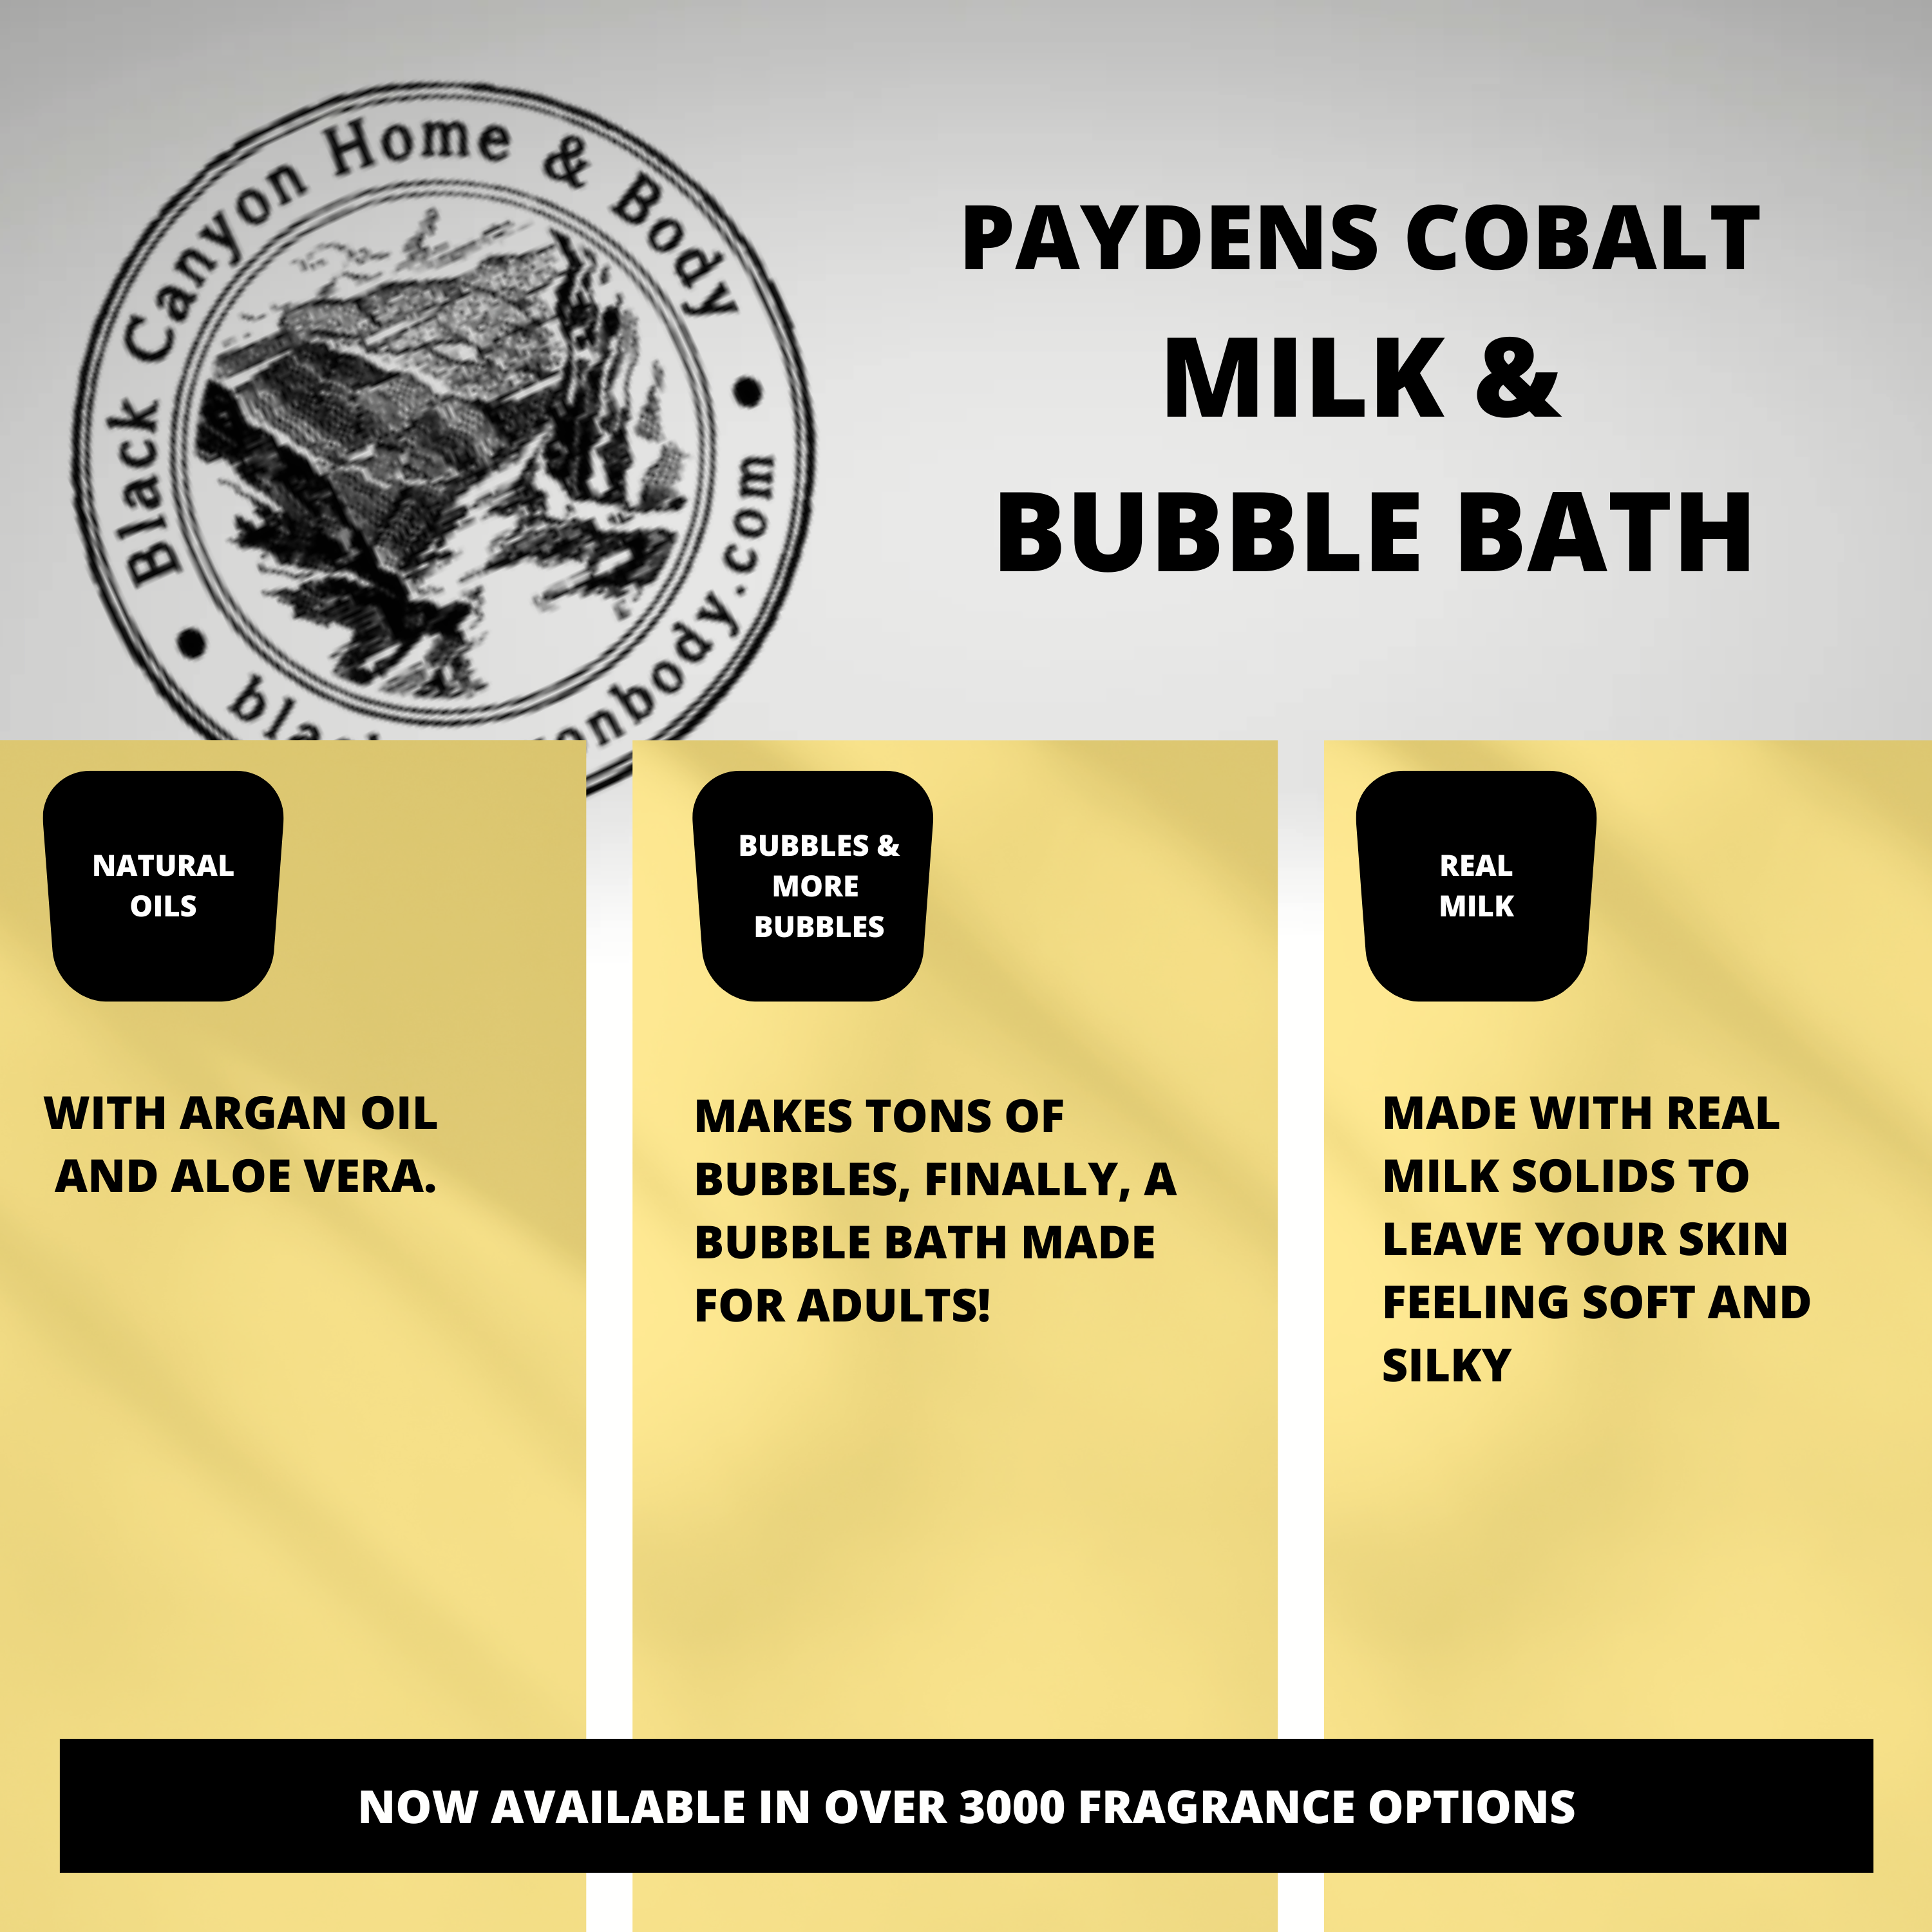 Black Canyon Bartlett Pear & Brandy Scented Milk & Bubble Bath